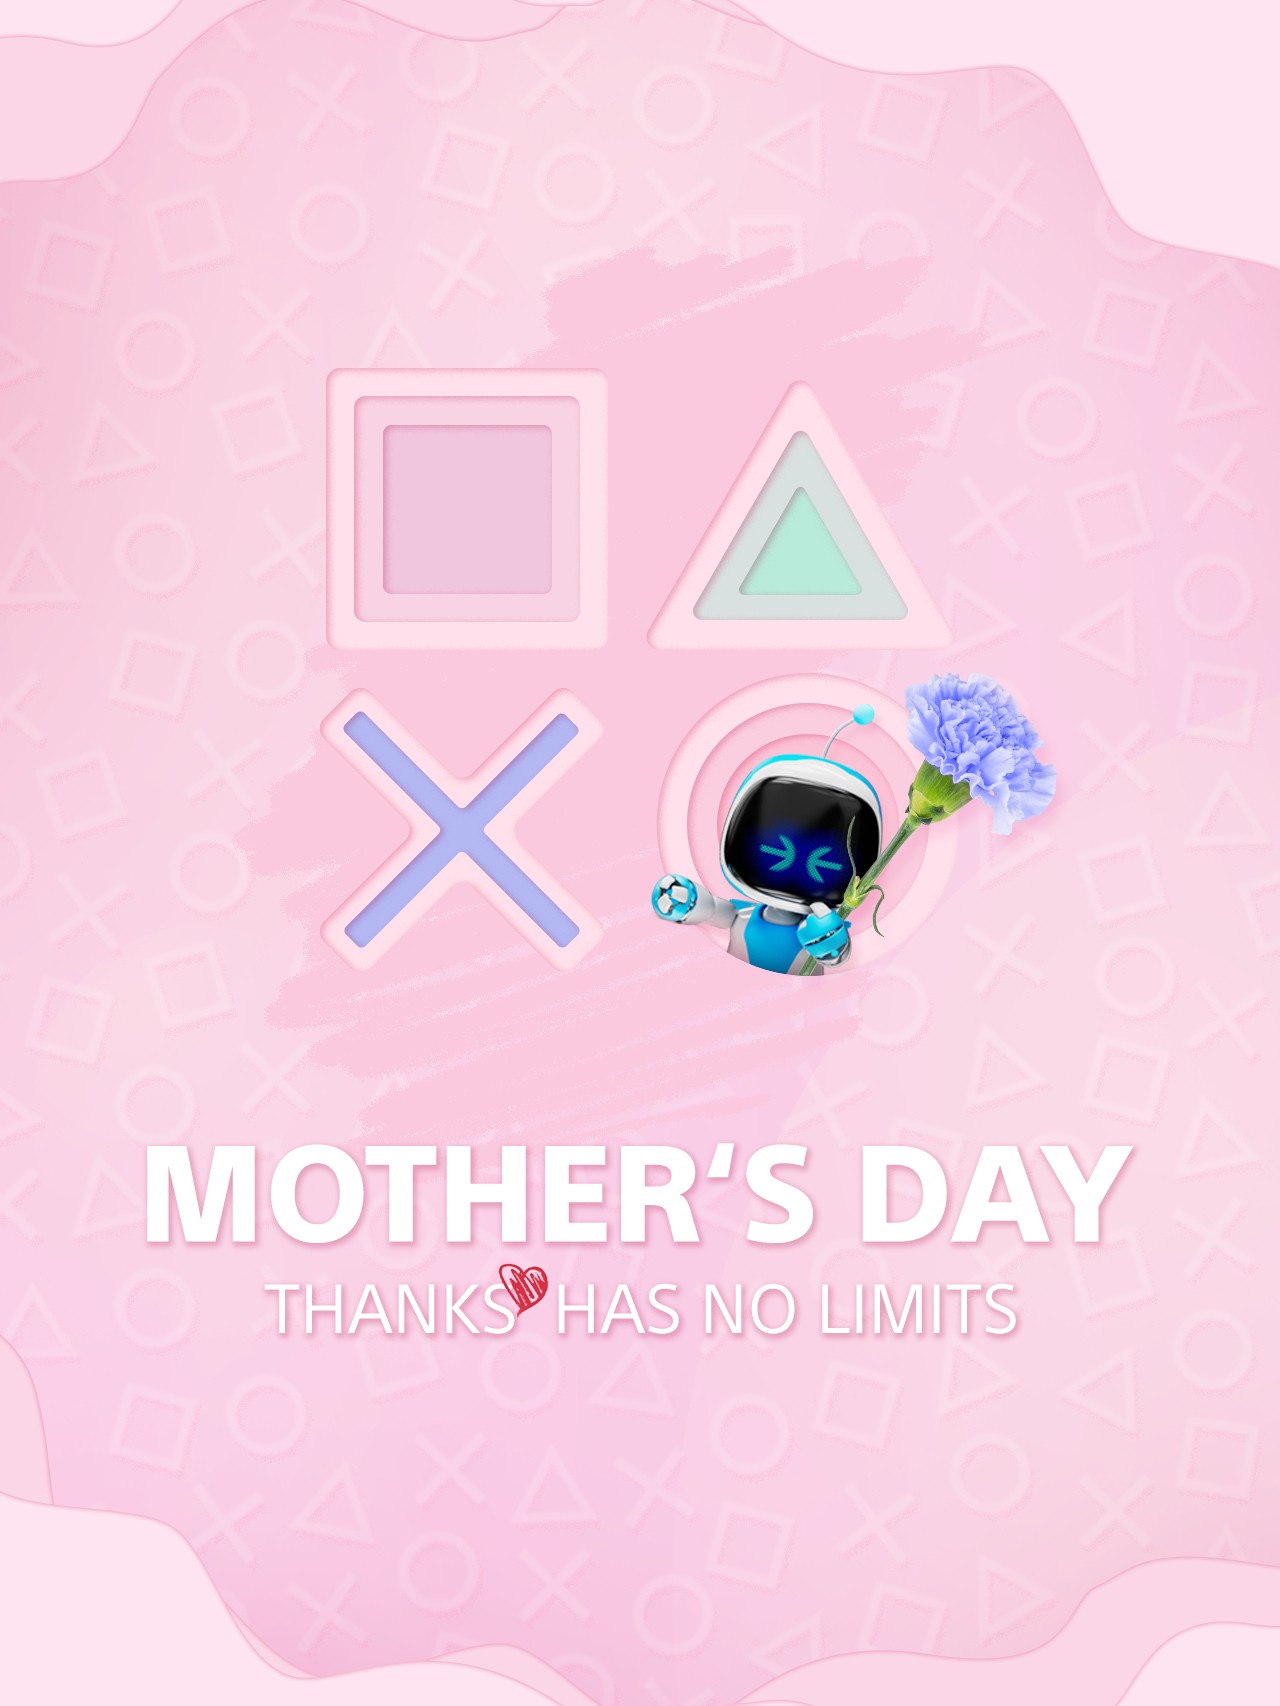 PlayStation祝全世界母親節快樂!謝謝你,幸福永遠存